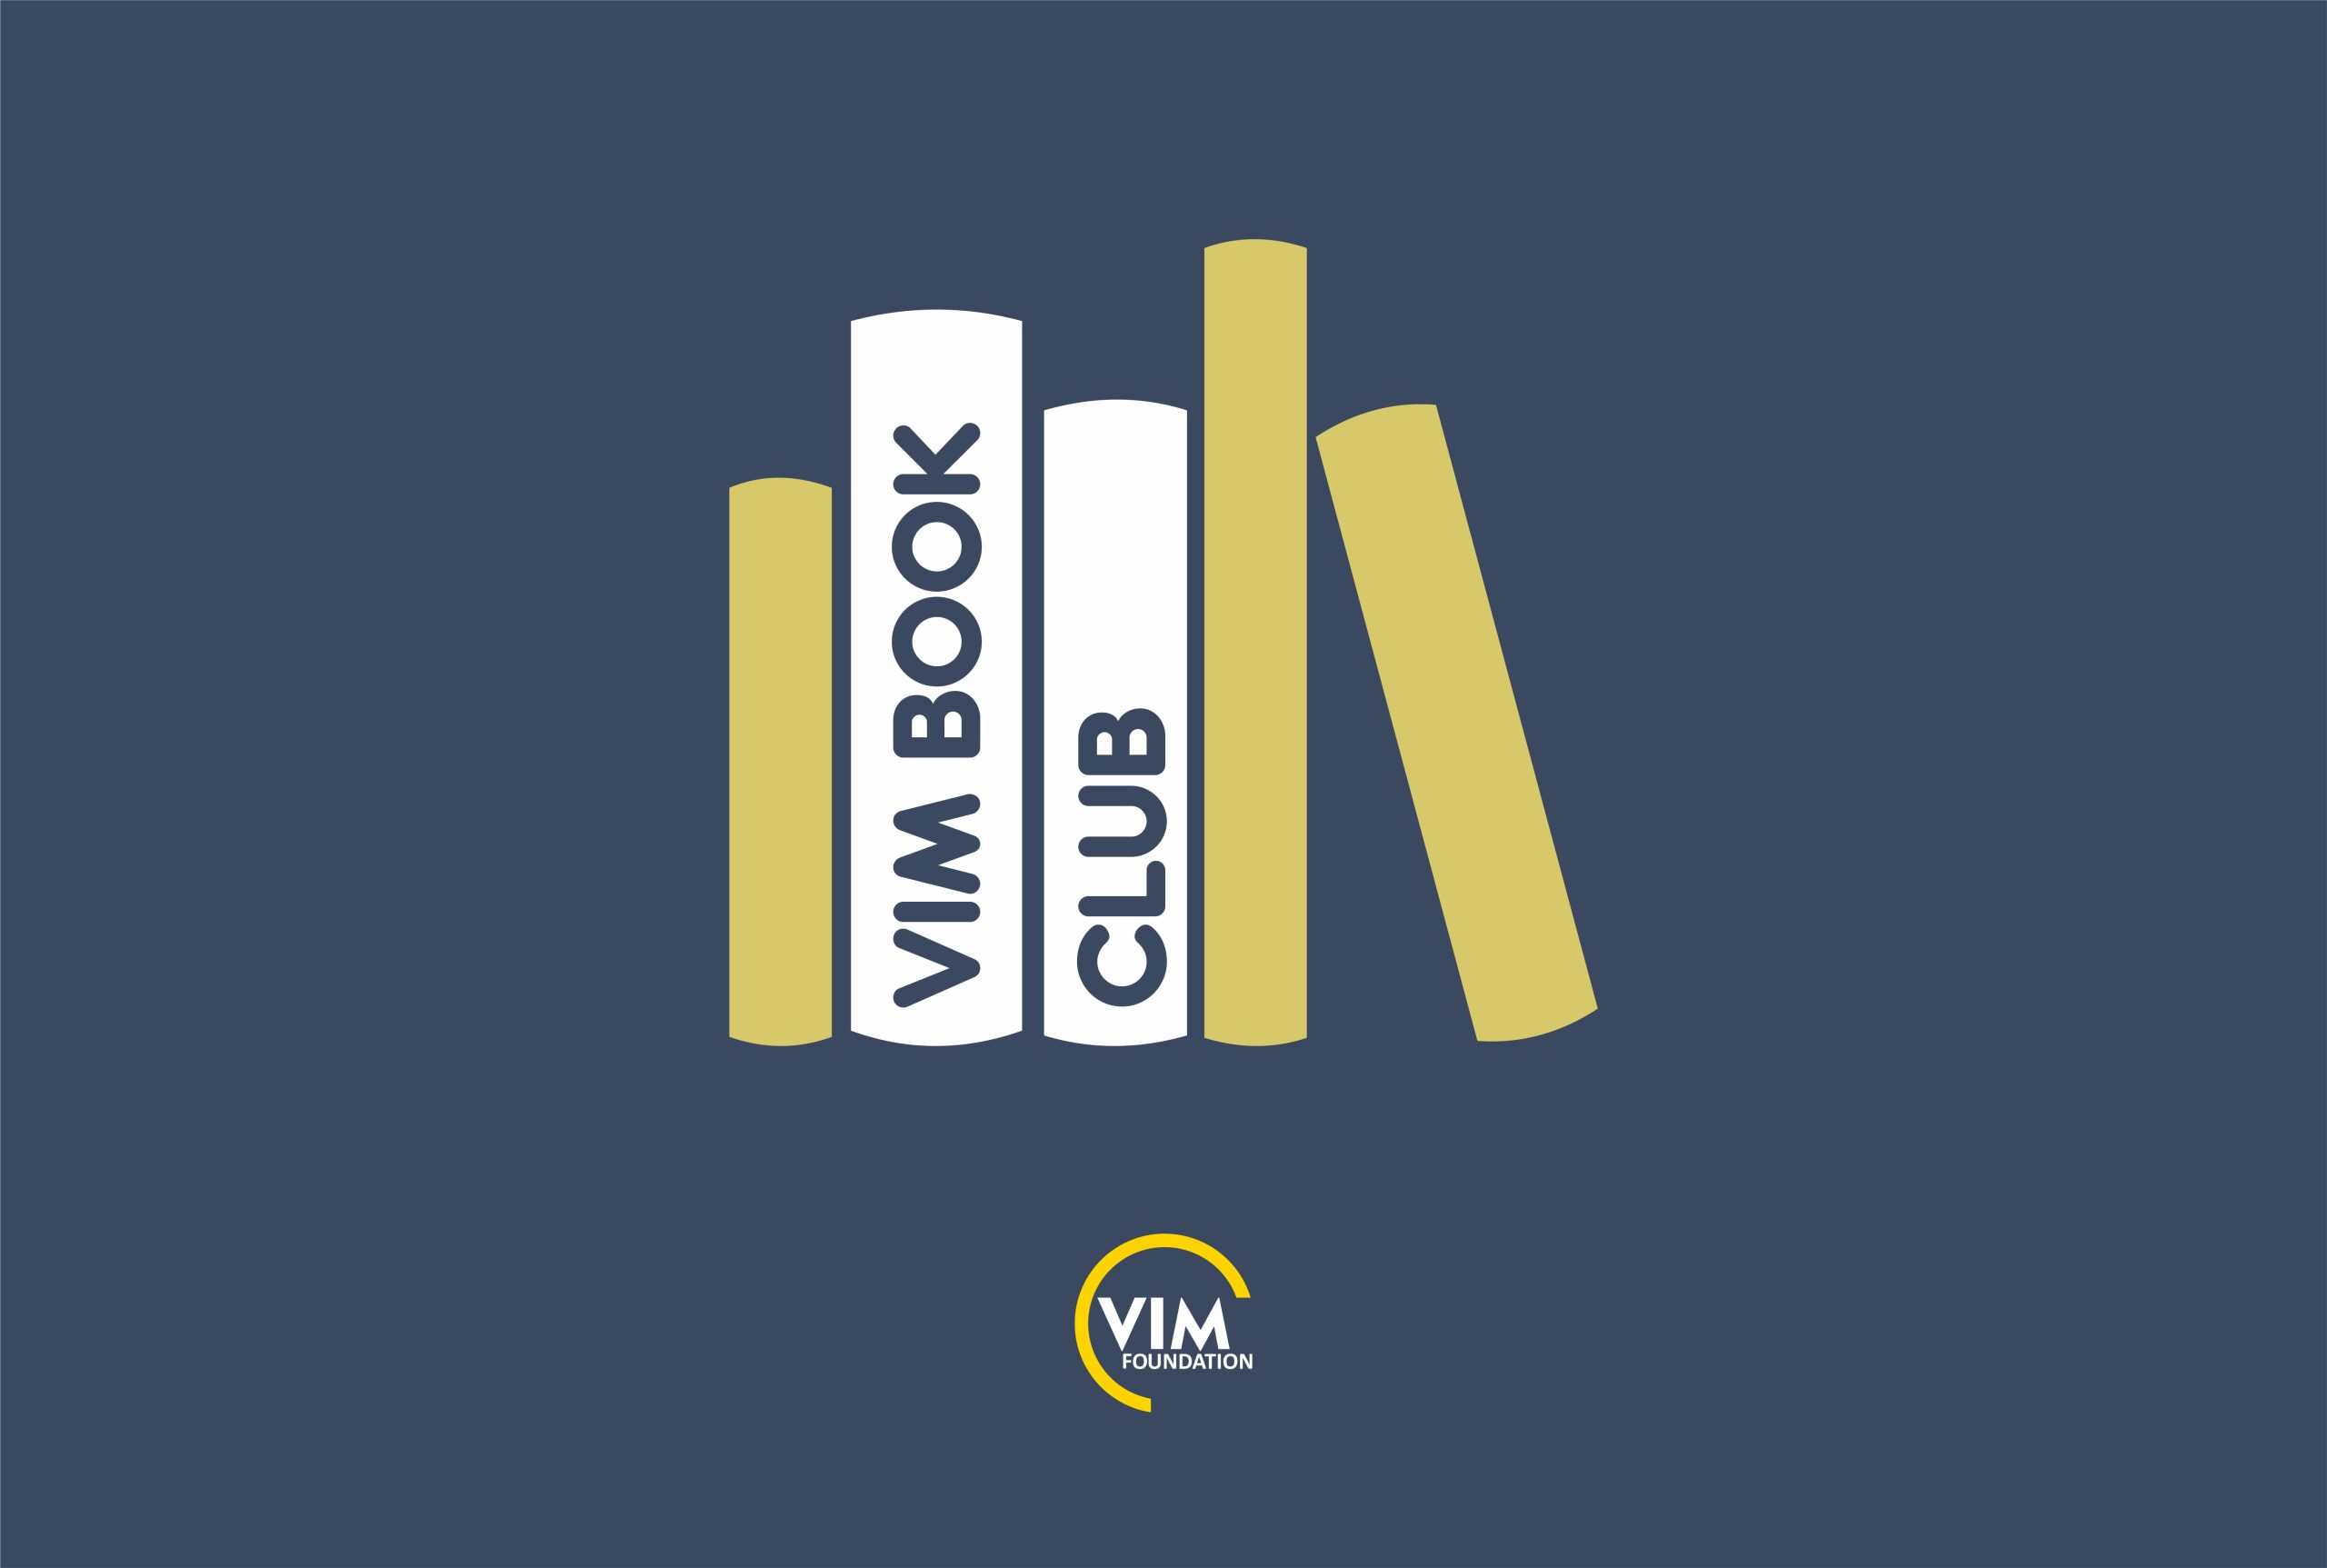 Vim Foundation announces the Vim Book Club project.